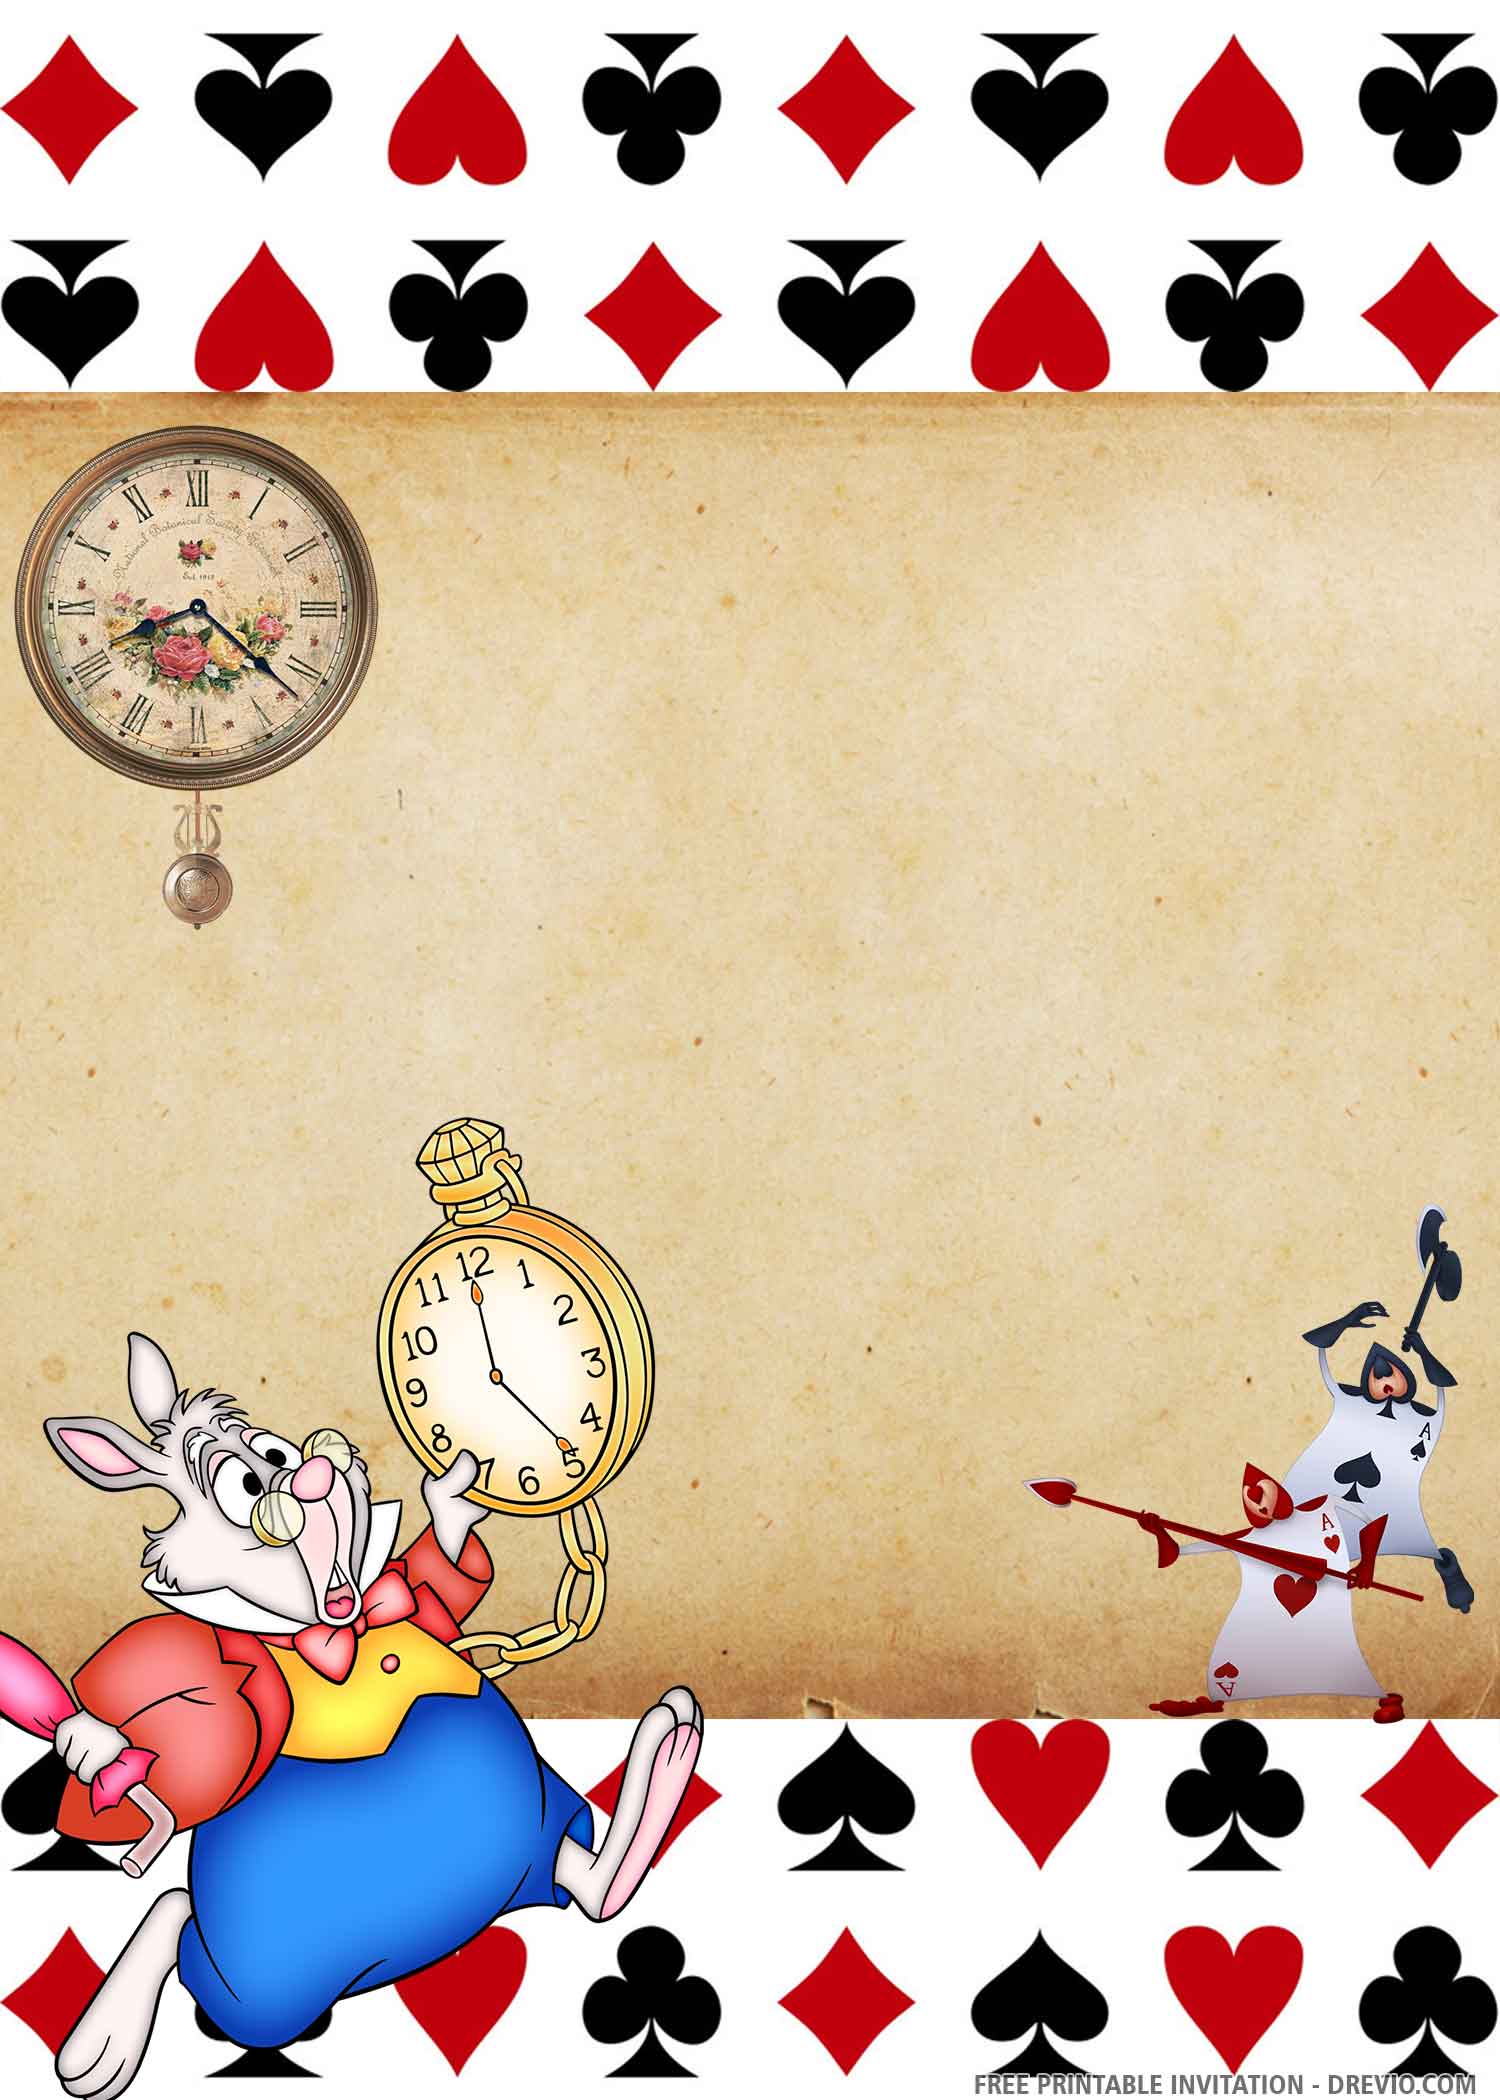  FREE PRINTABLE Alice In The Wonderland Birthday Invitation Templates Download Hundreds